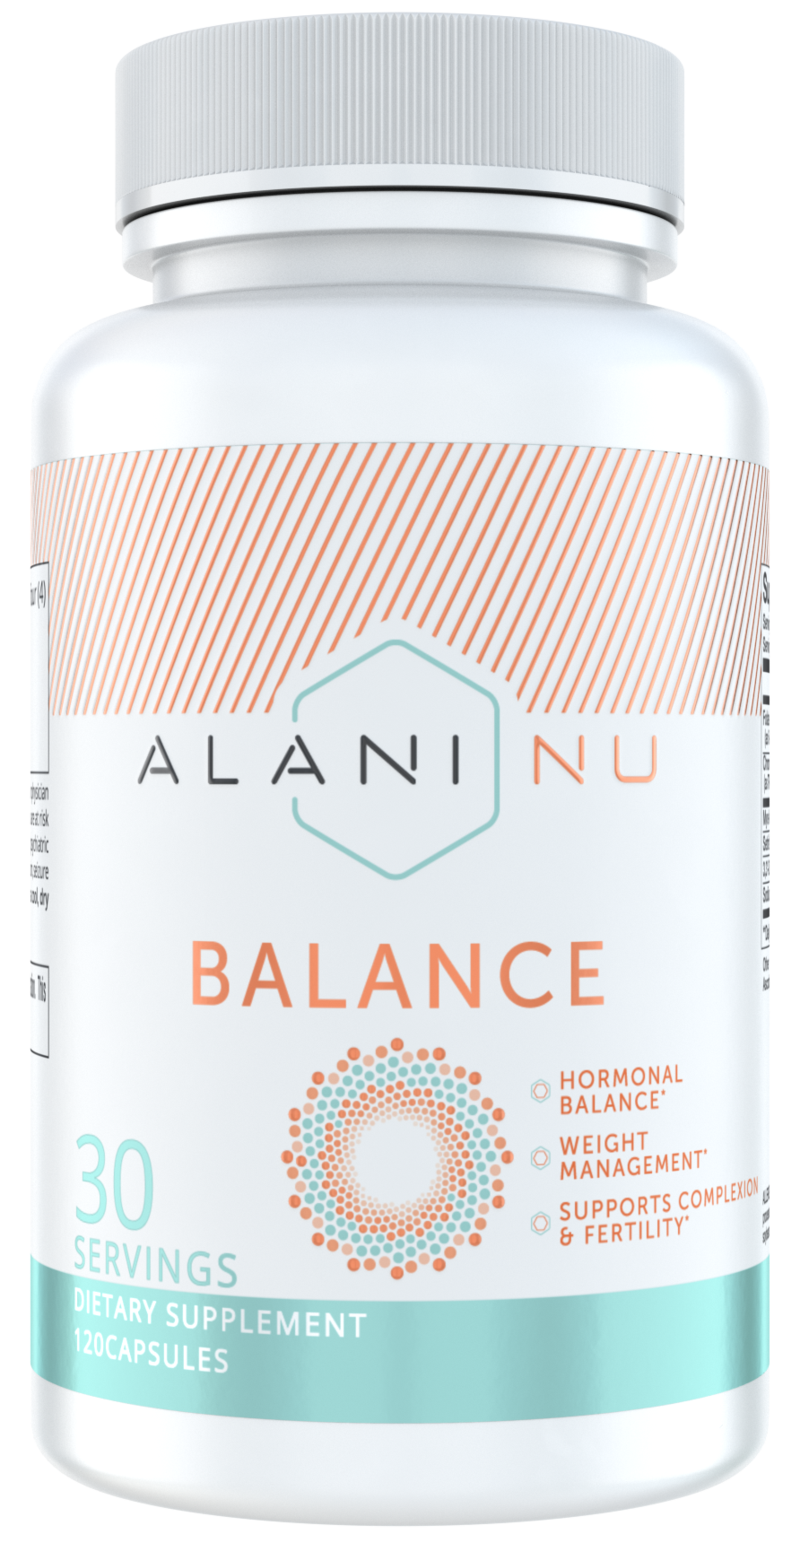 Alani Nu Balance Hormone Support Supplement